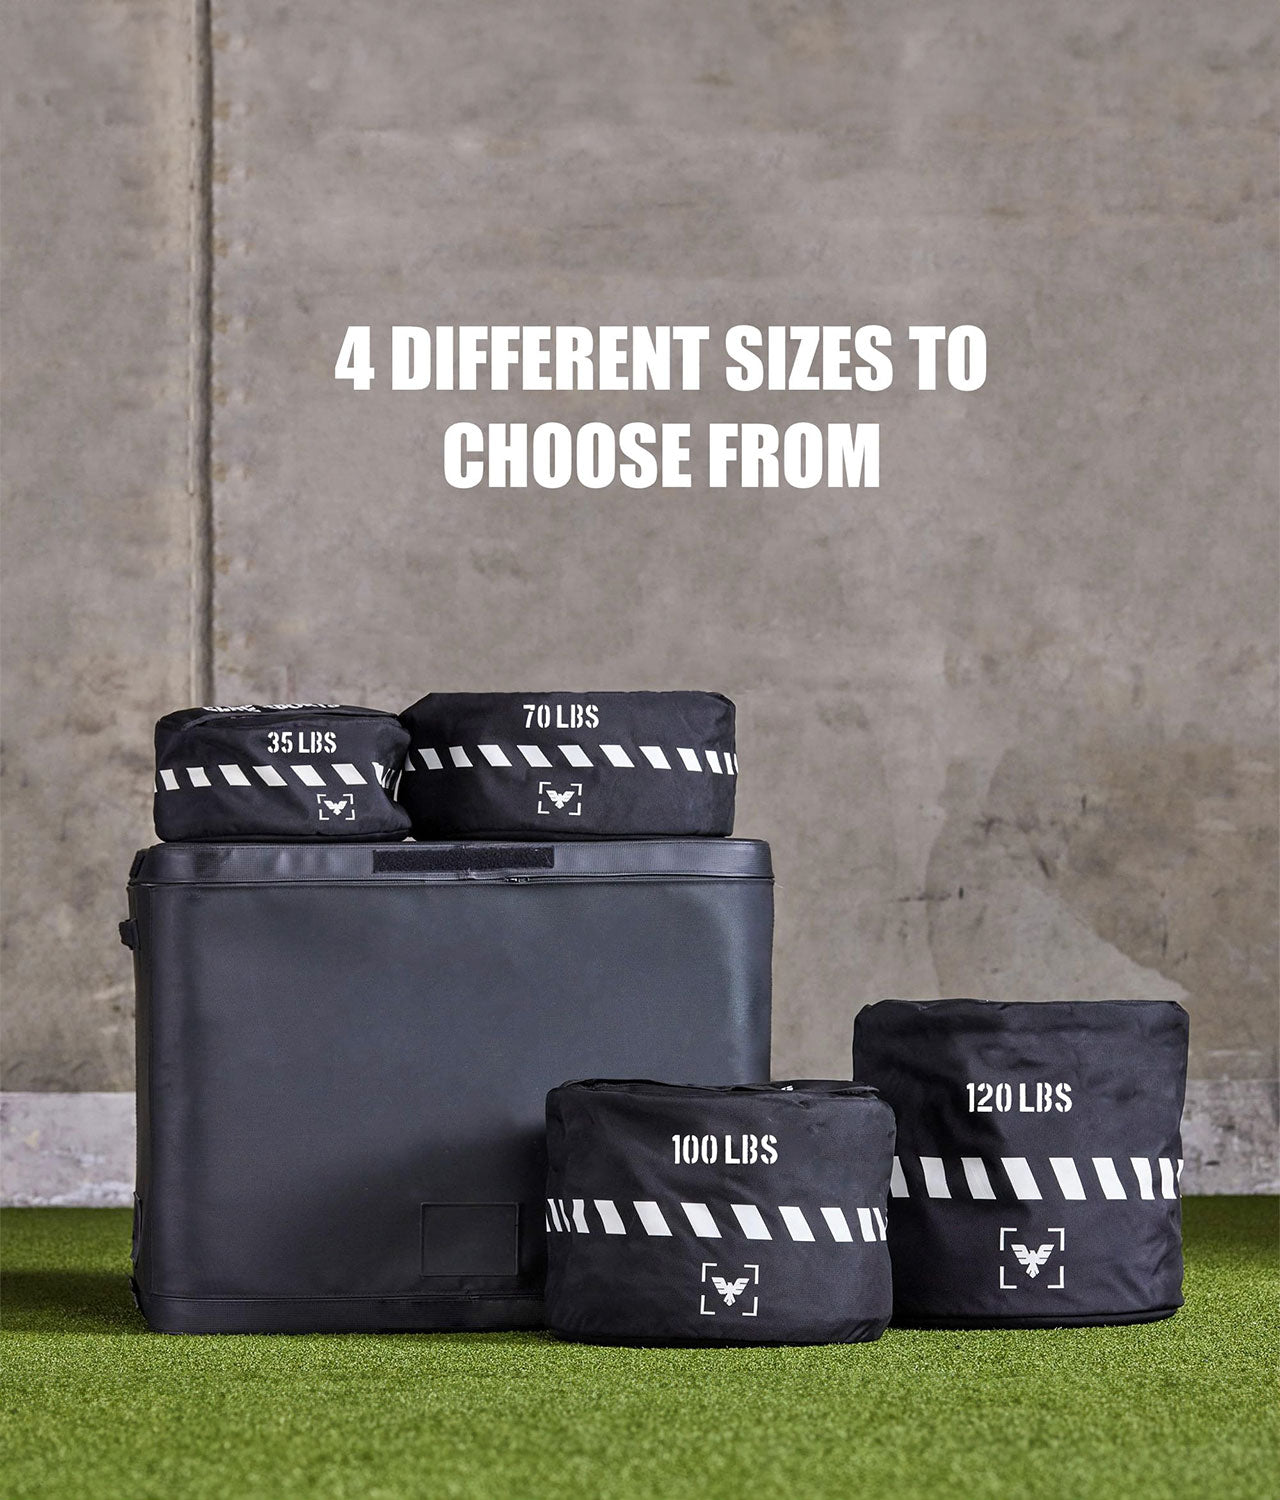 Elite Sports Core Round Workout Sandbag 35 lbs 4Different Sizes to Choose